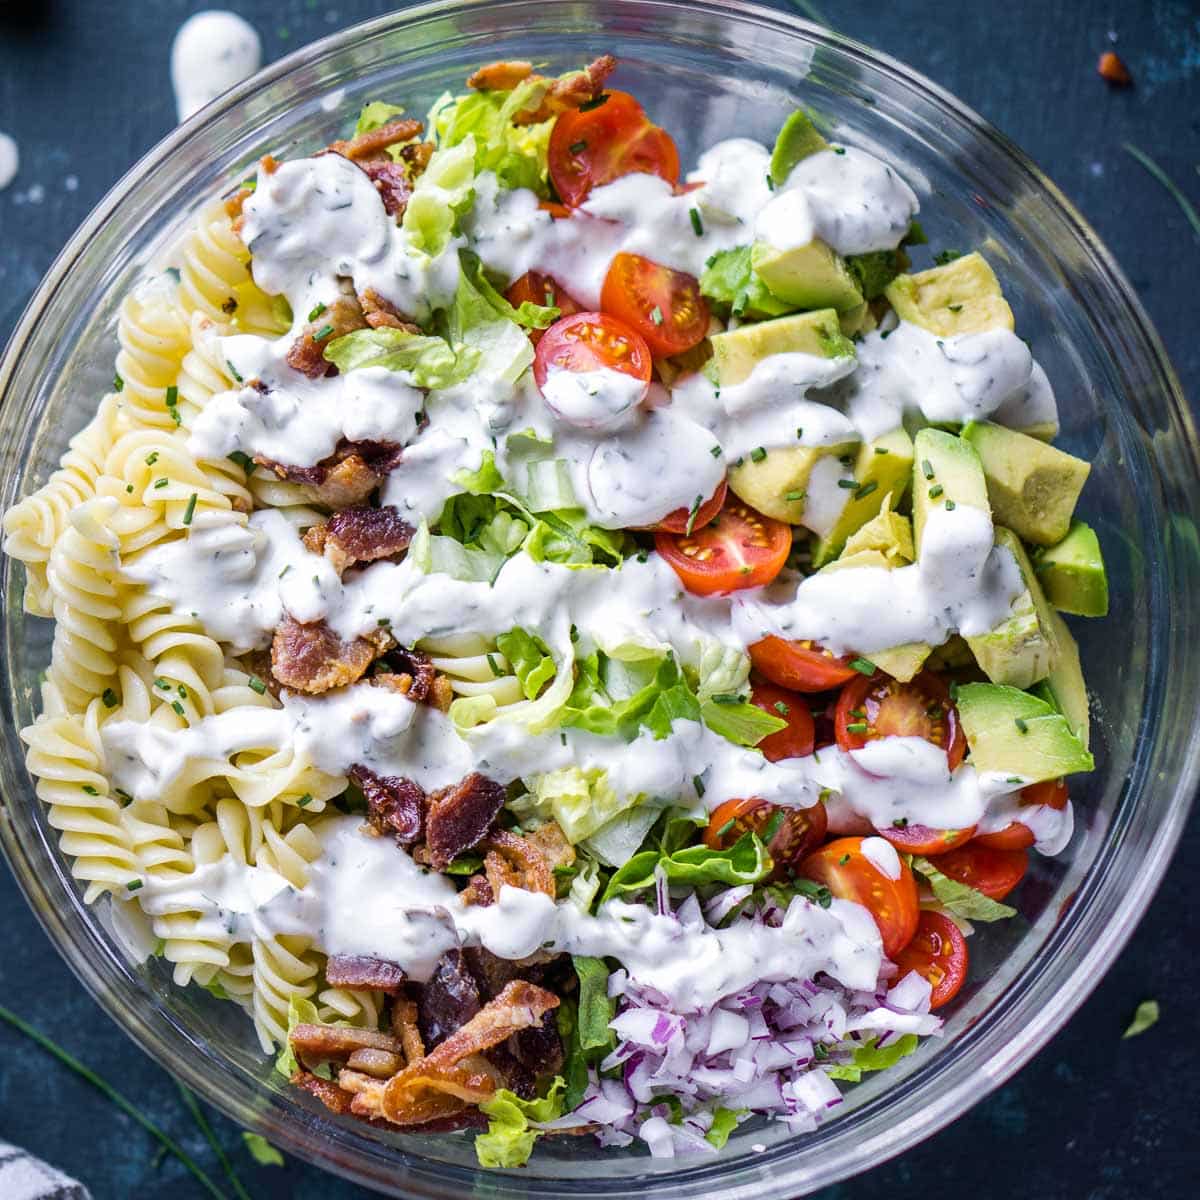 dressed BLT pasta salad in glass bowl